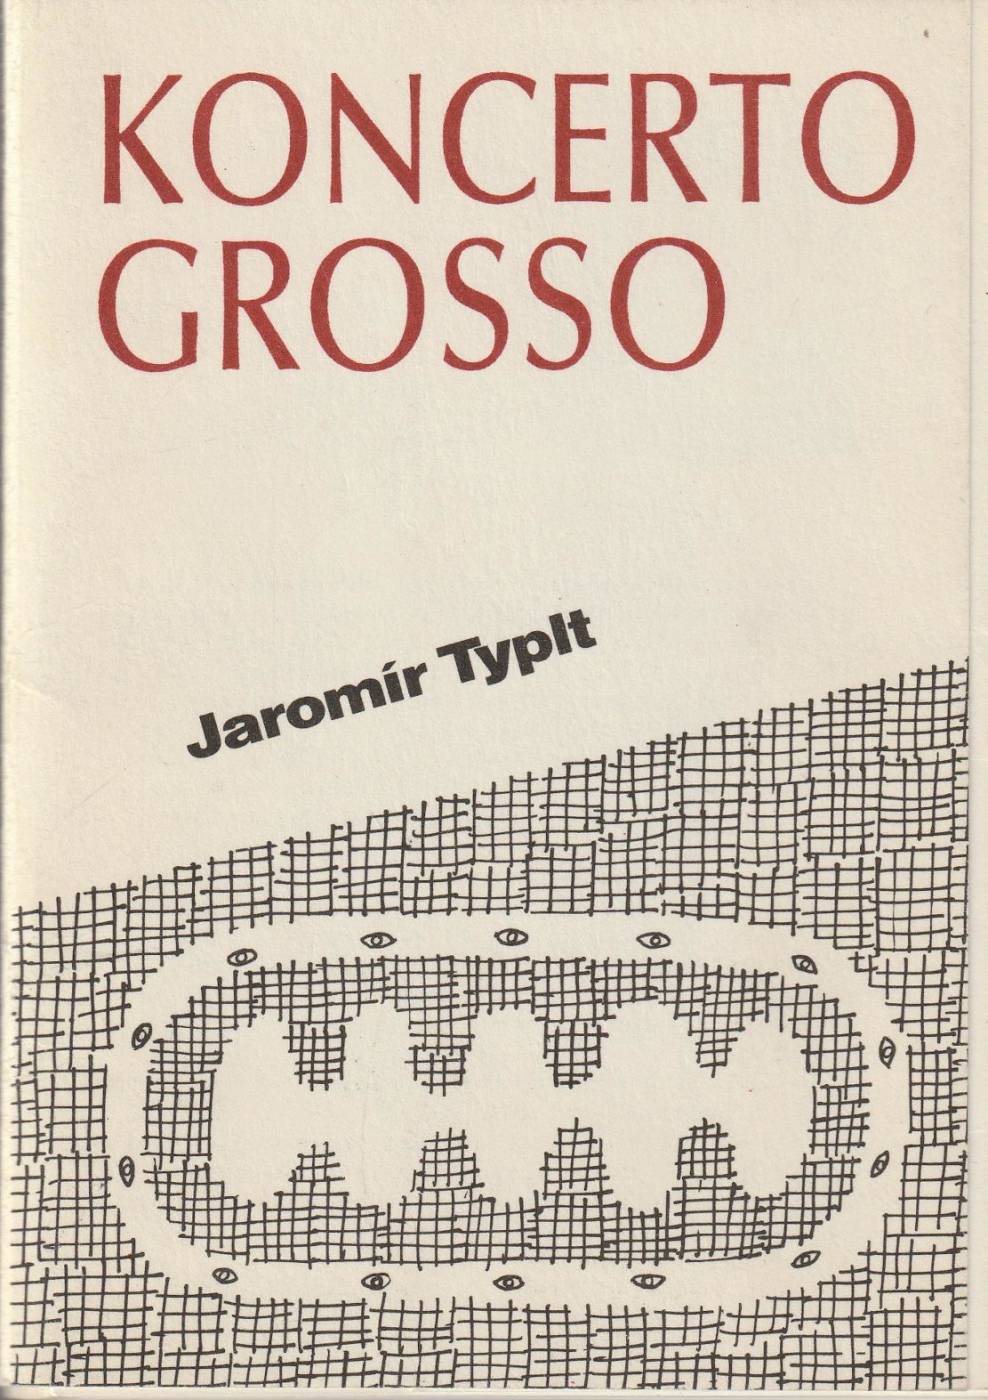 Typlt, Jaromír – Koncerto grosso